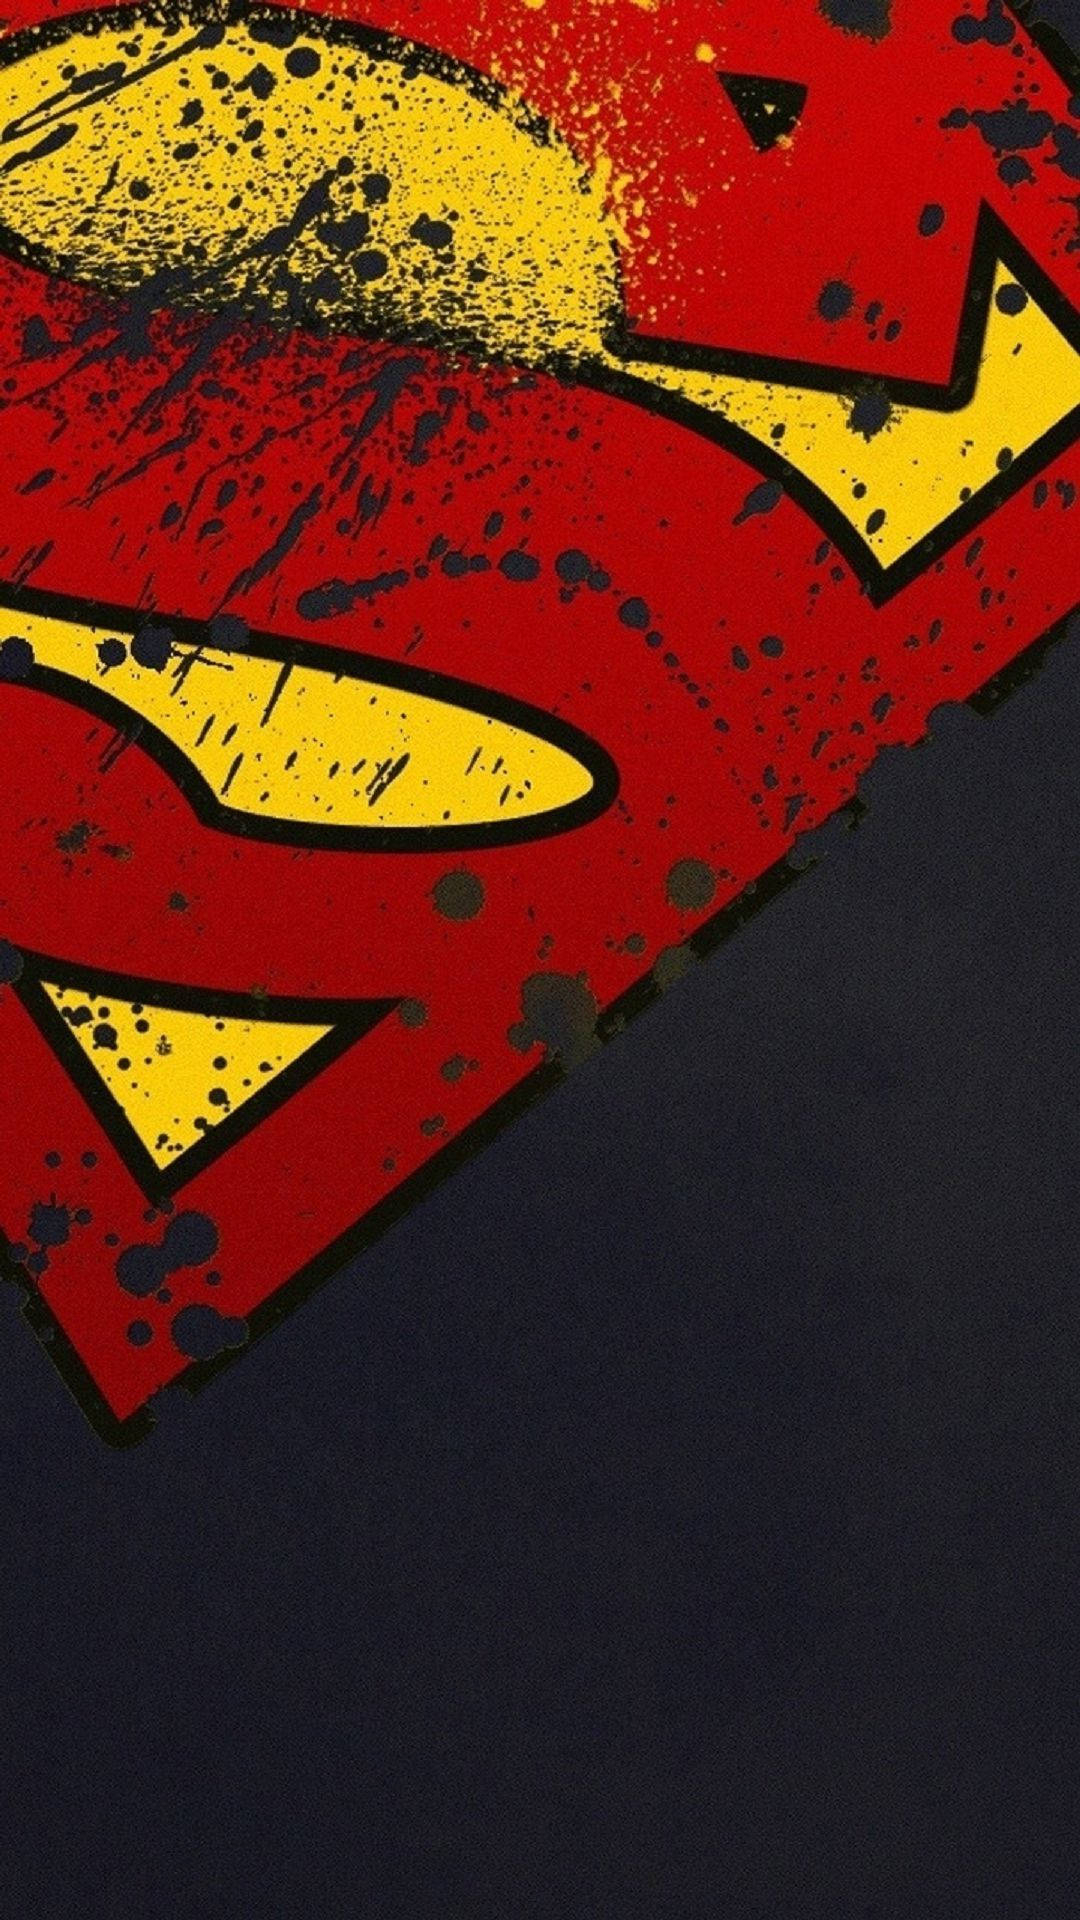 1080x1920 Download Superman Logo Minimal Android Wallpaper Free Wallpaper | Wallpapers .com